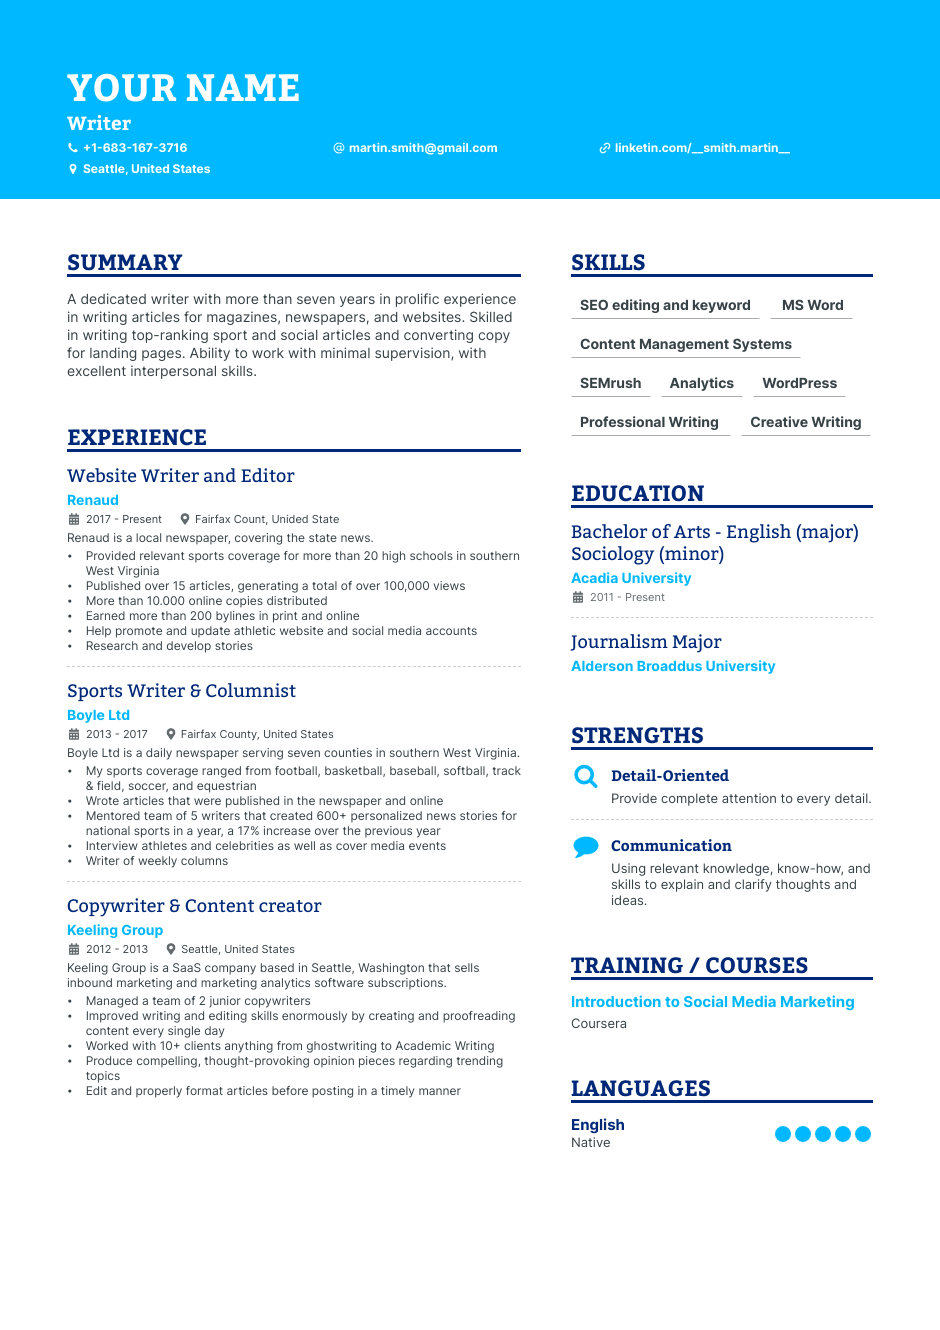 Writer resume example